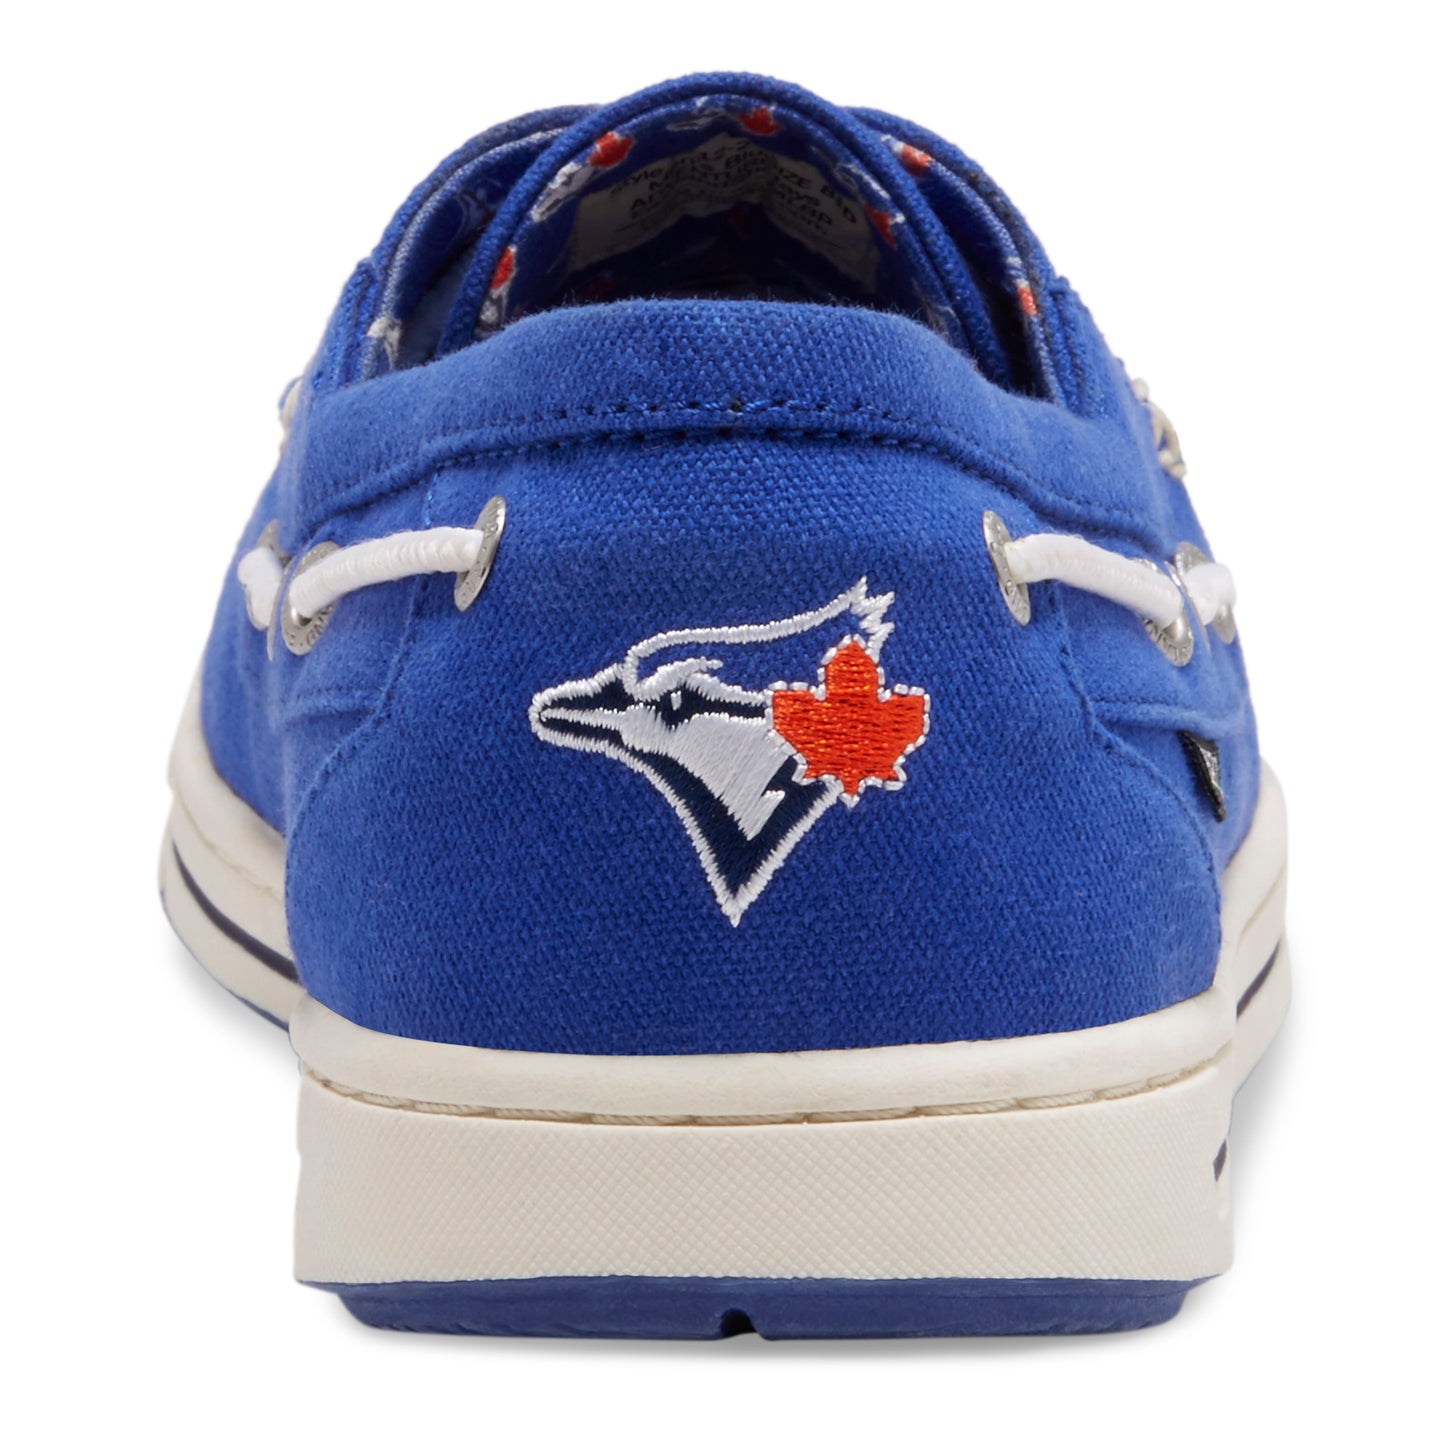 Men's Adventure MLB Toronto Blue Jays Canvas Boat Shoe